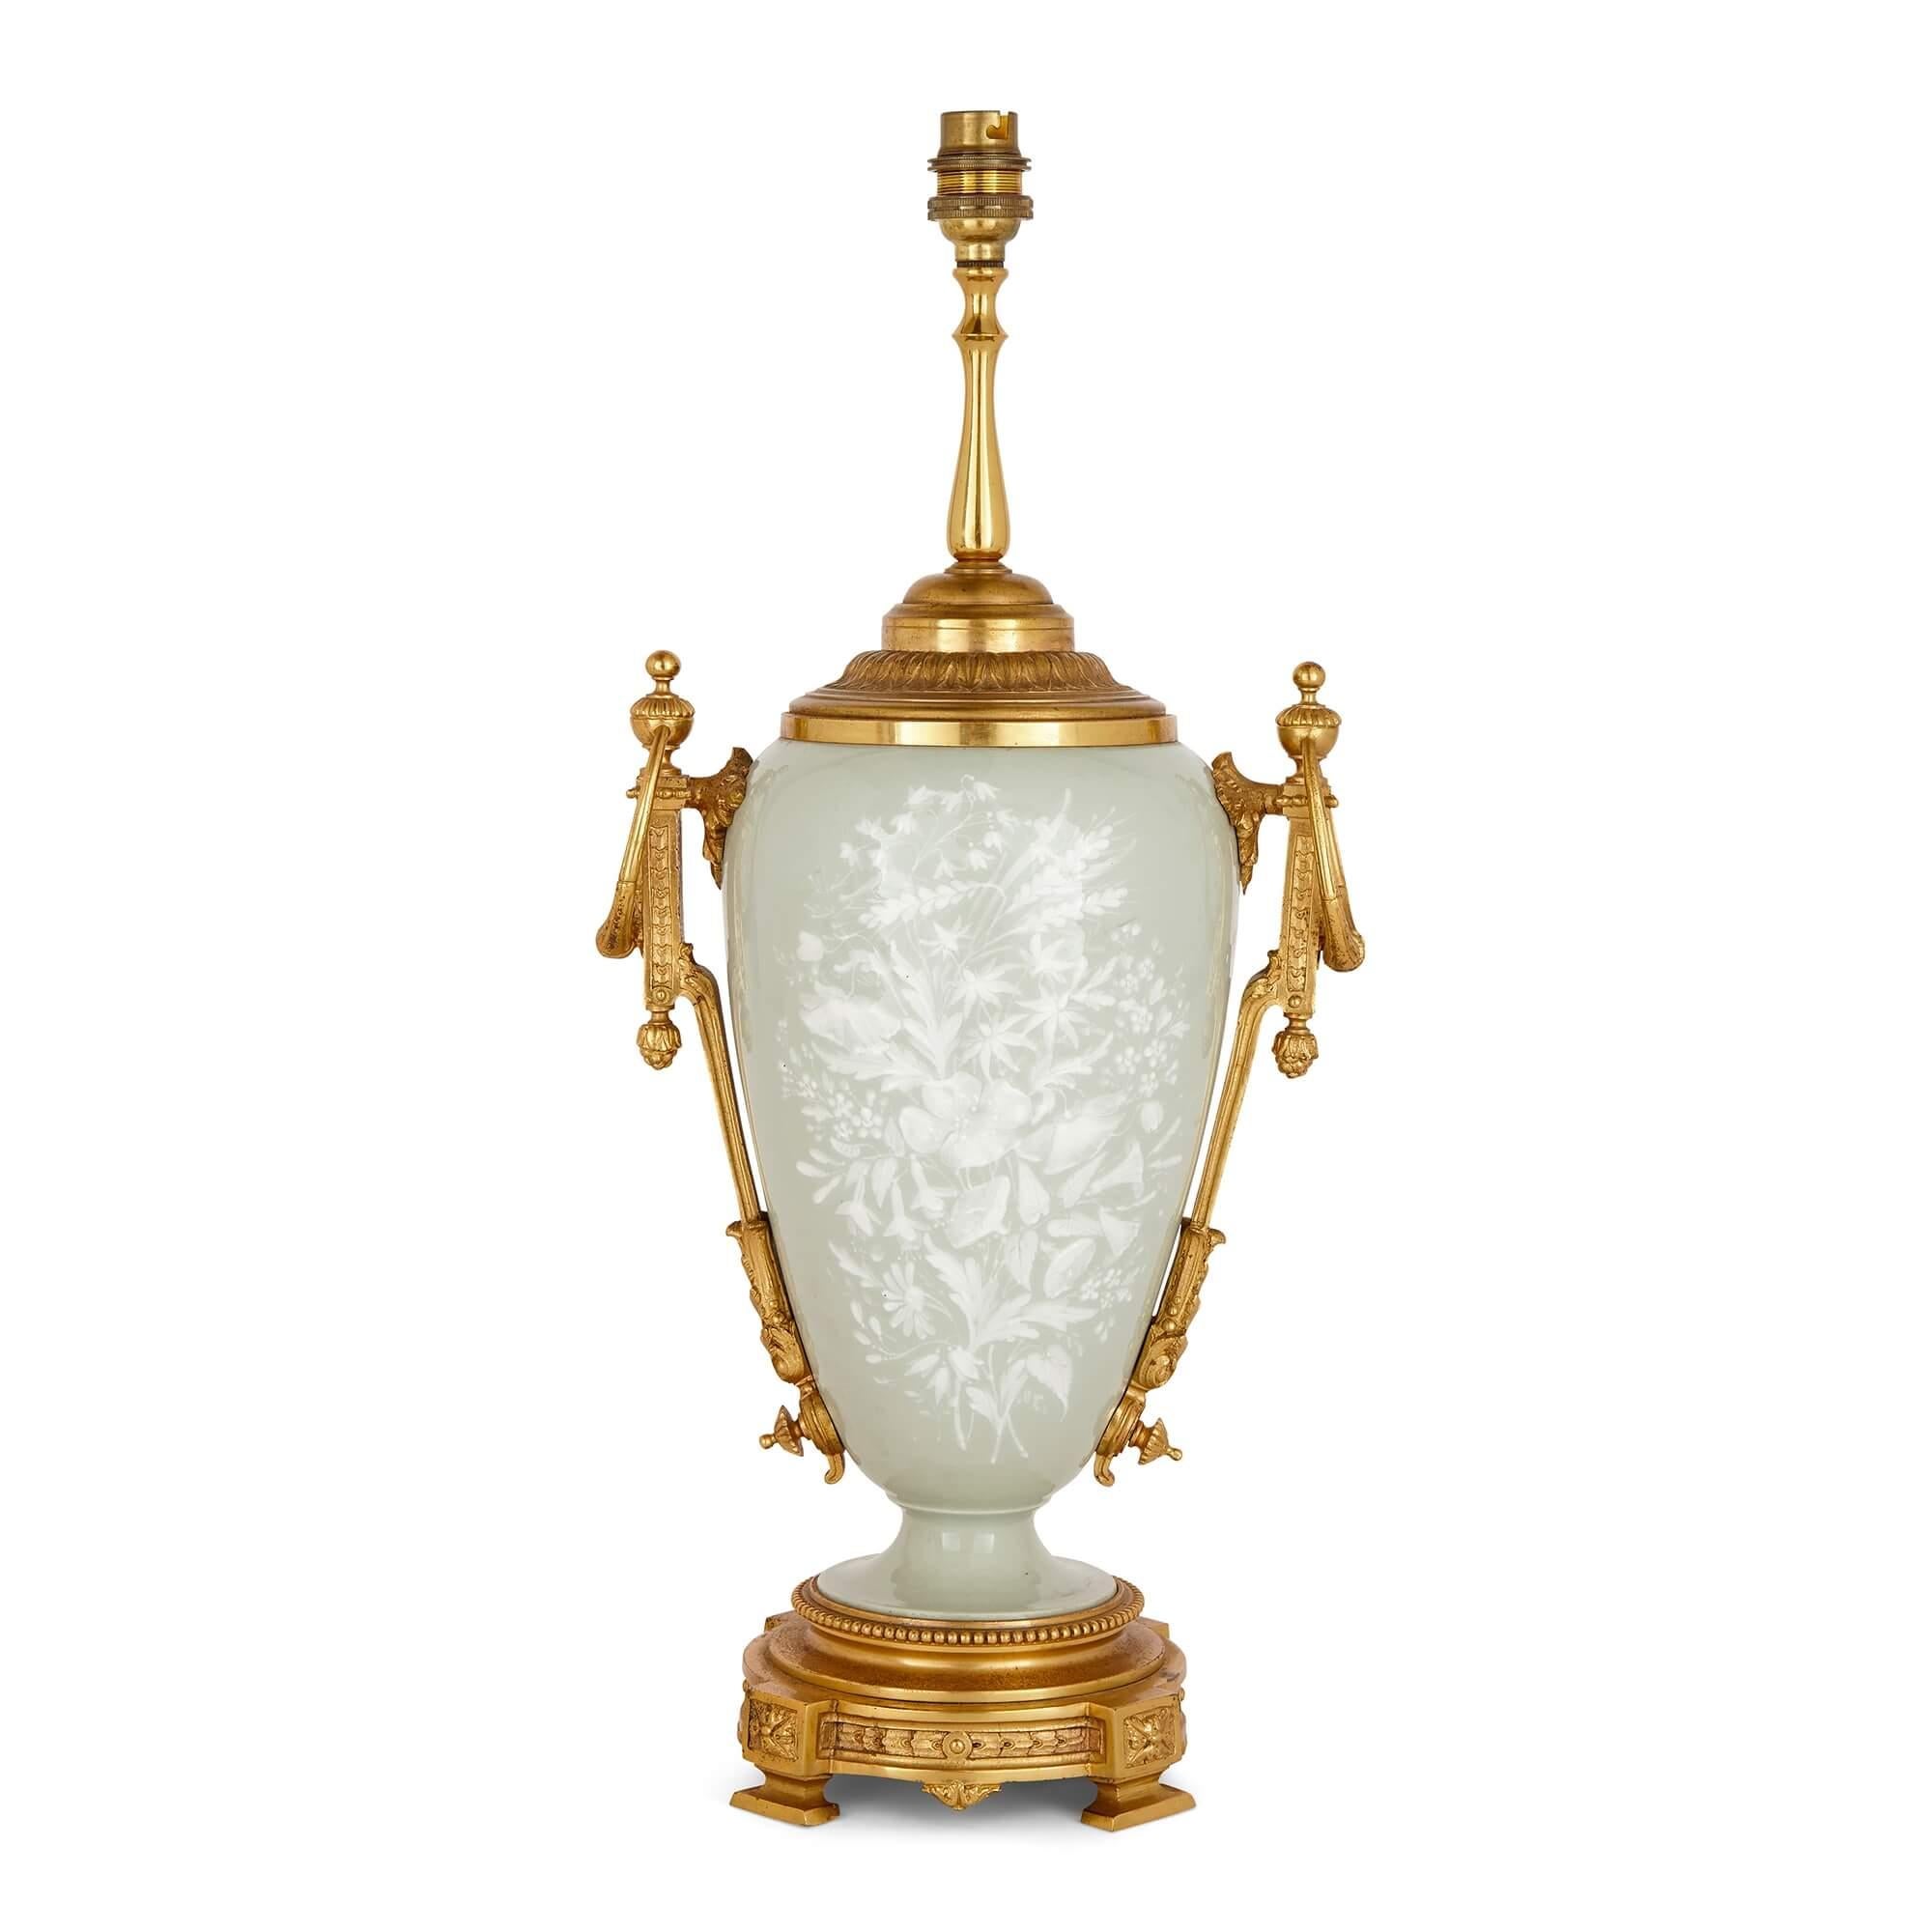 Ormolu mounted celadon porcelain and pâte-sur-pâte vase-form lamp
French, Late 19th Century
Measures: height 52cm, width 23cm, depth 17cm

Consisting of gilt-bronze handles and mounts, pâte-sur-pâte floral sprays on front and back, and a celadon